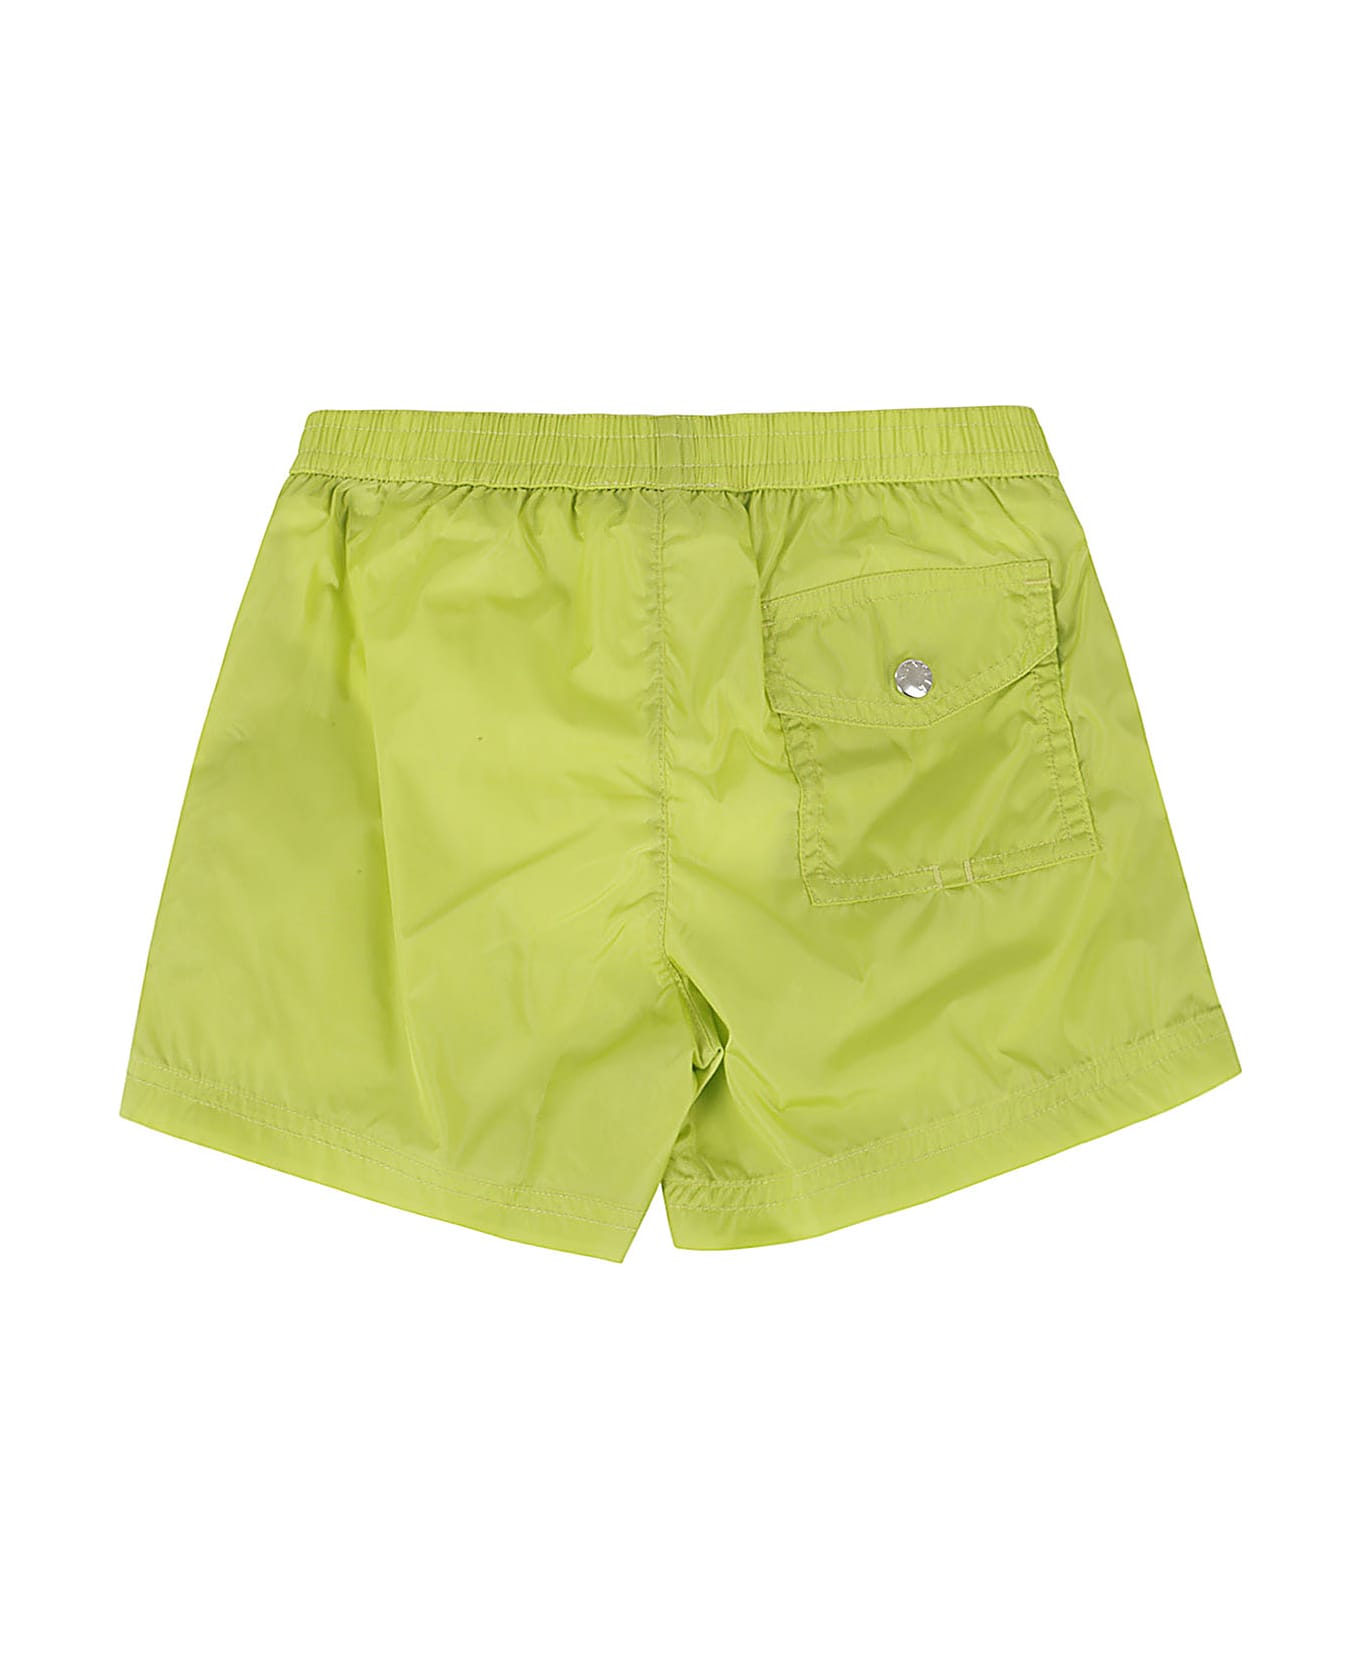 Moncler Shorts - G Lime